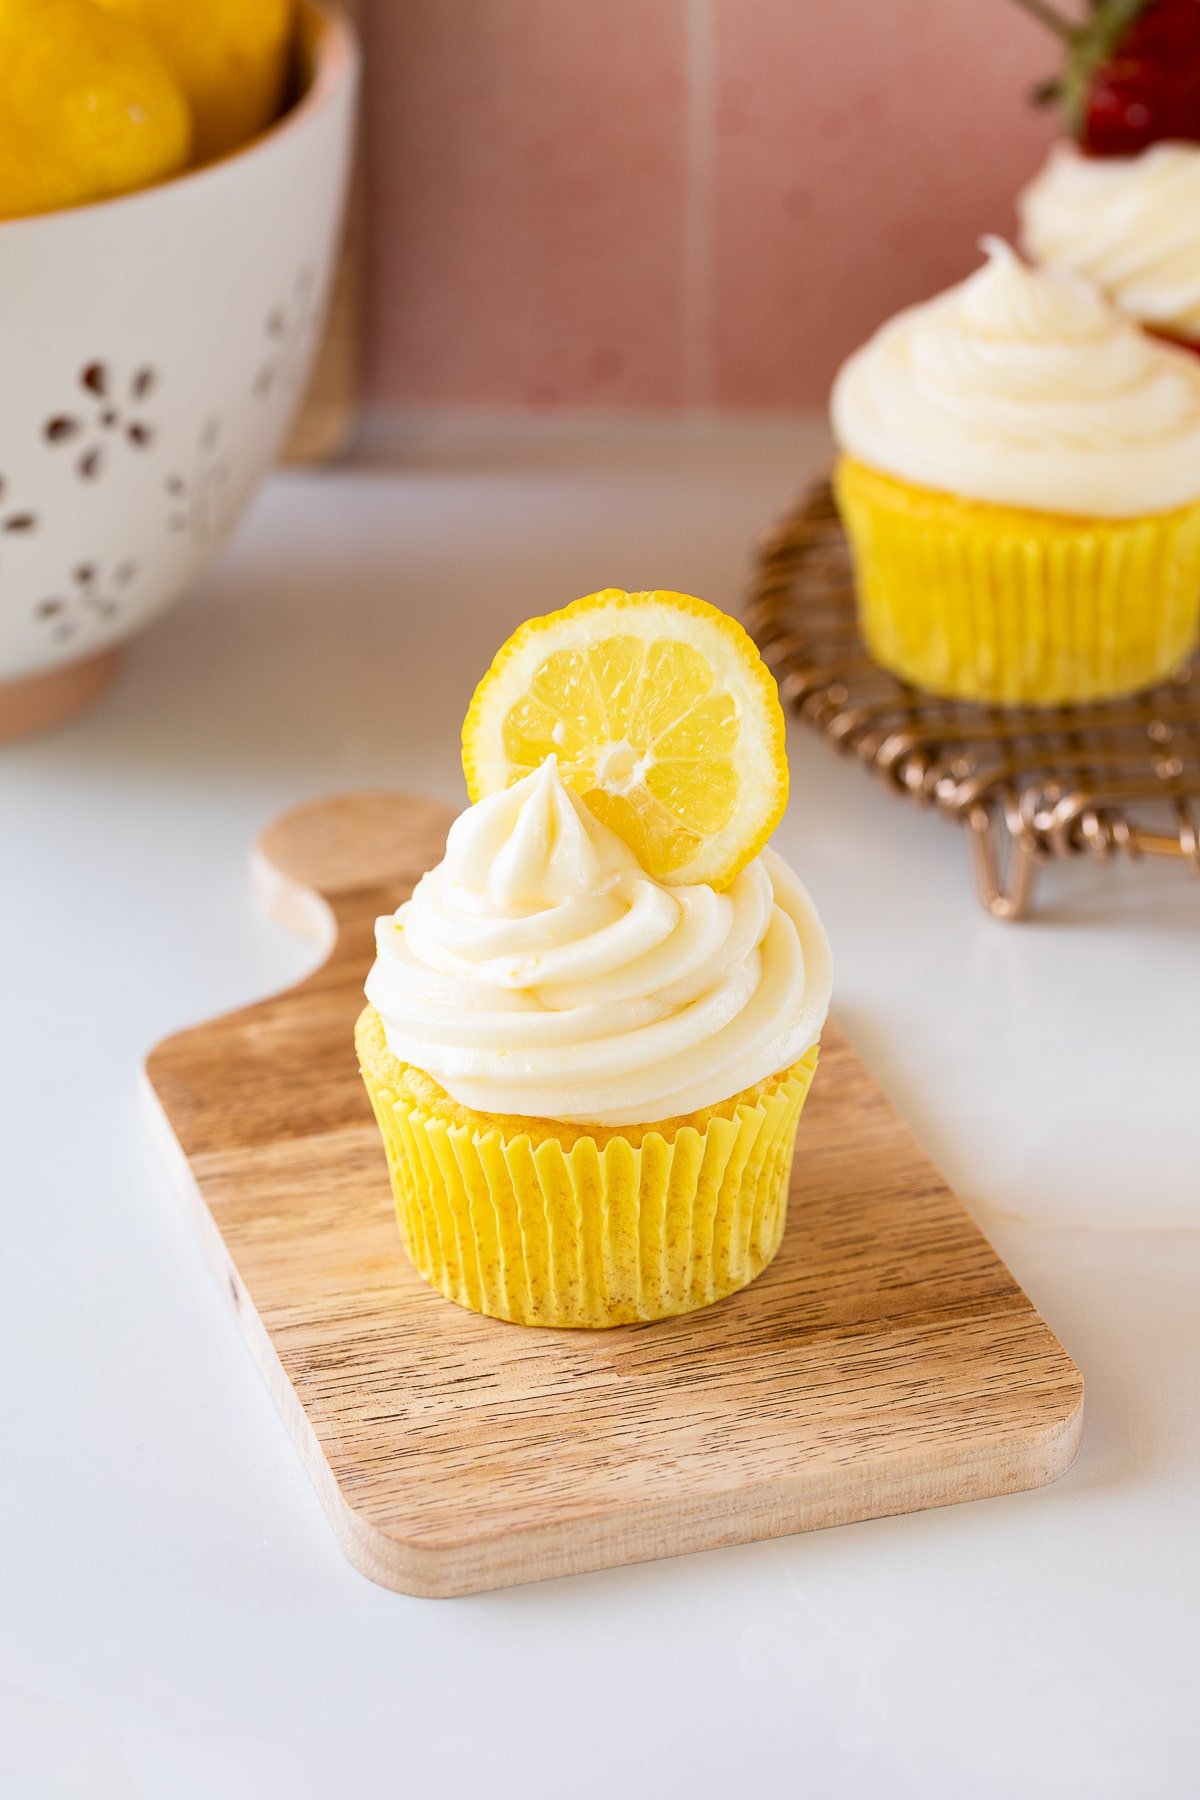 lemon cream cheese frosting on cupcake with lemon slice